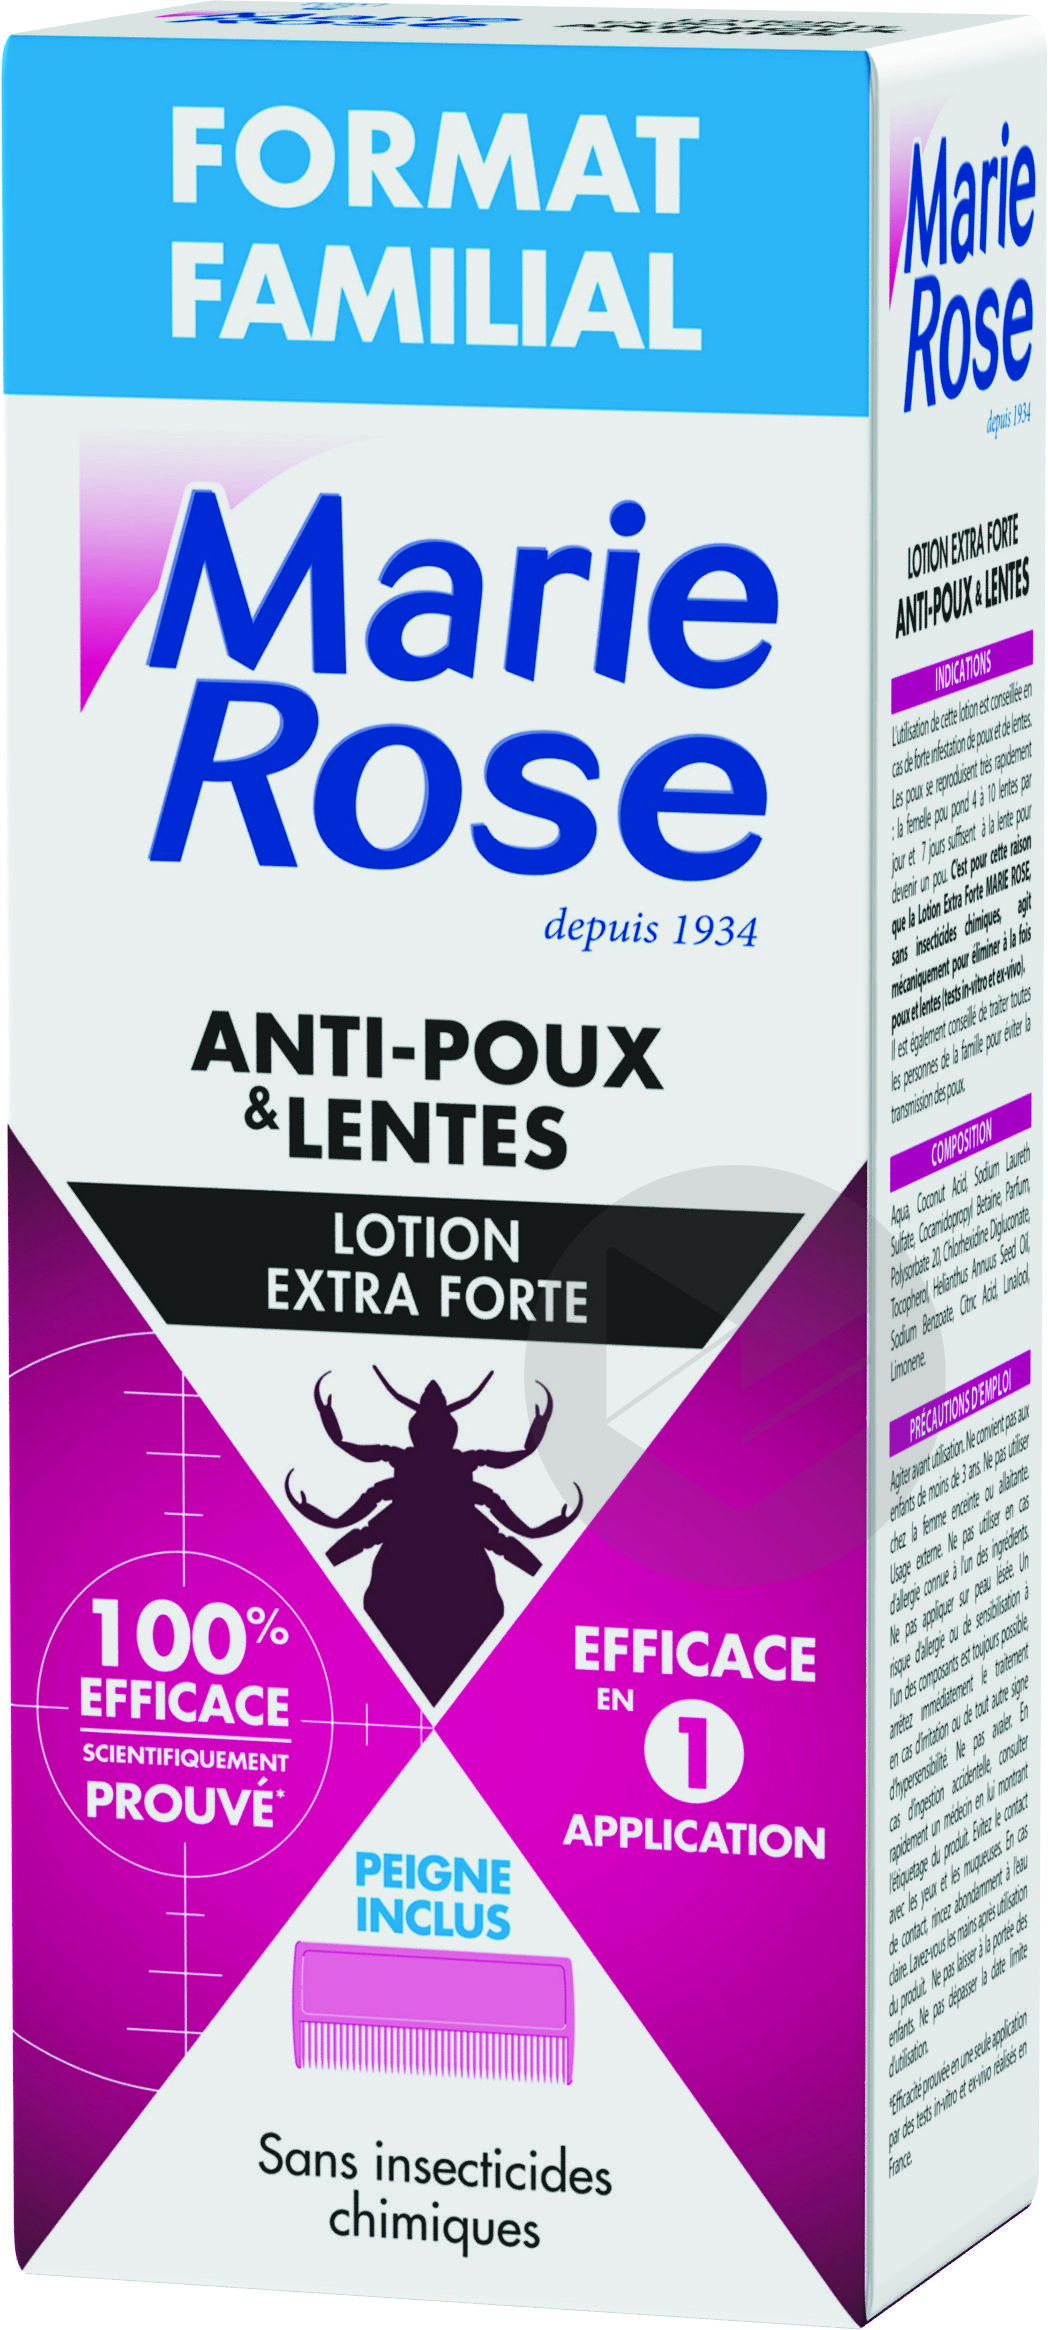 ANTI-POUX & LENTES, Lotion Extra Forte, Pack Familial, 200 ml